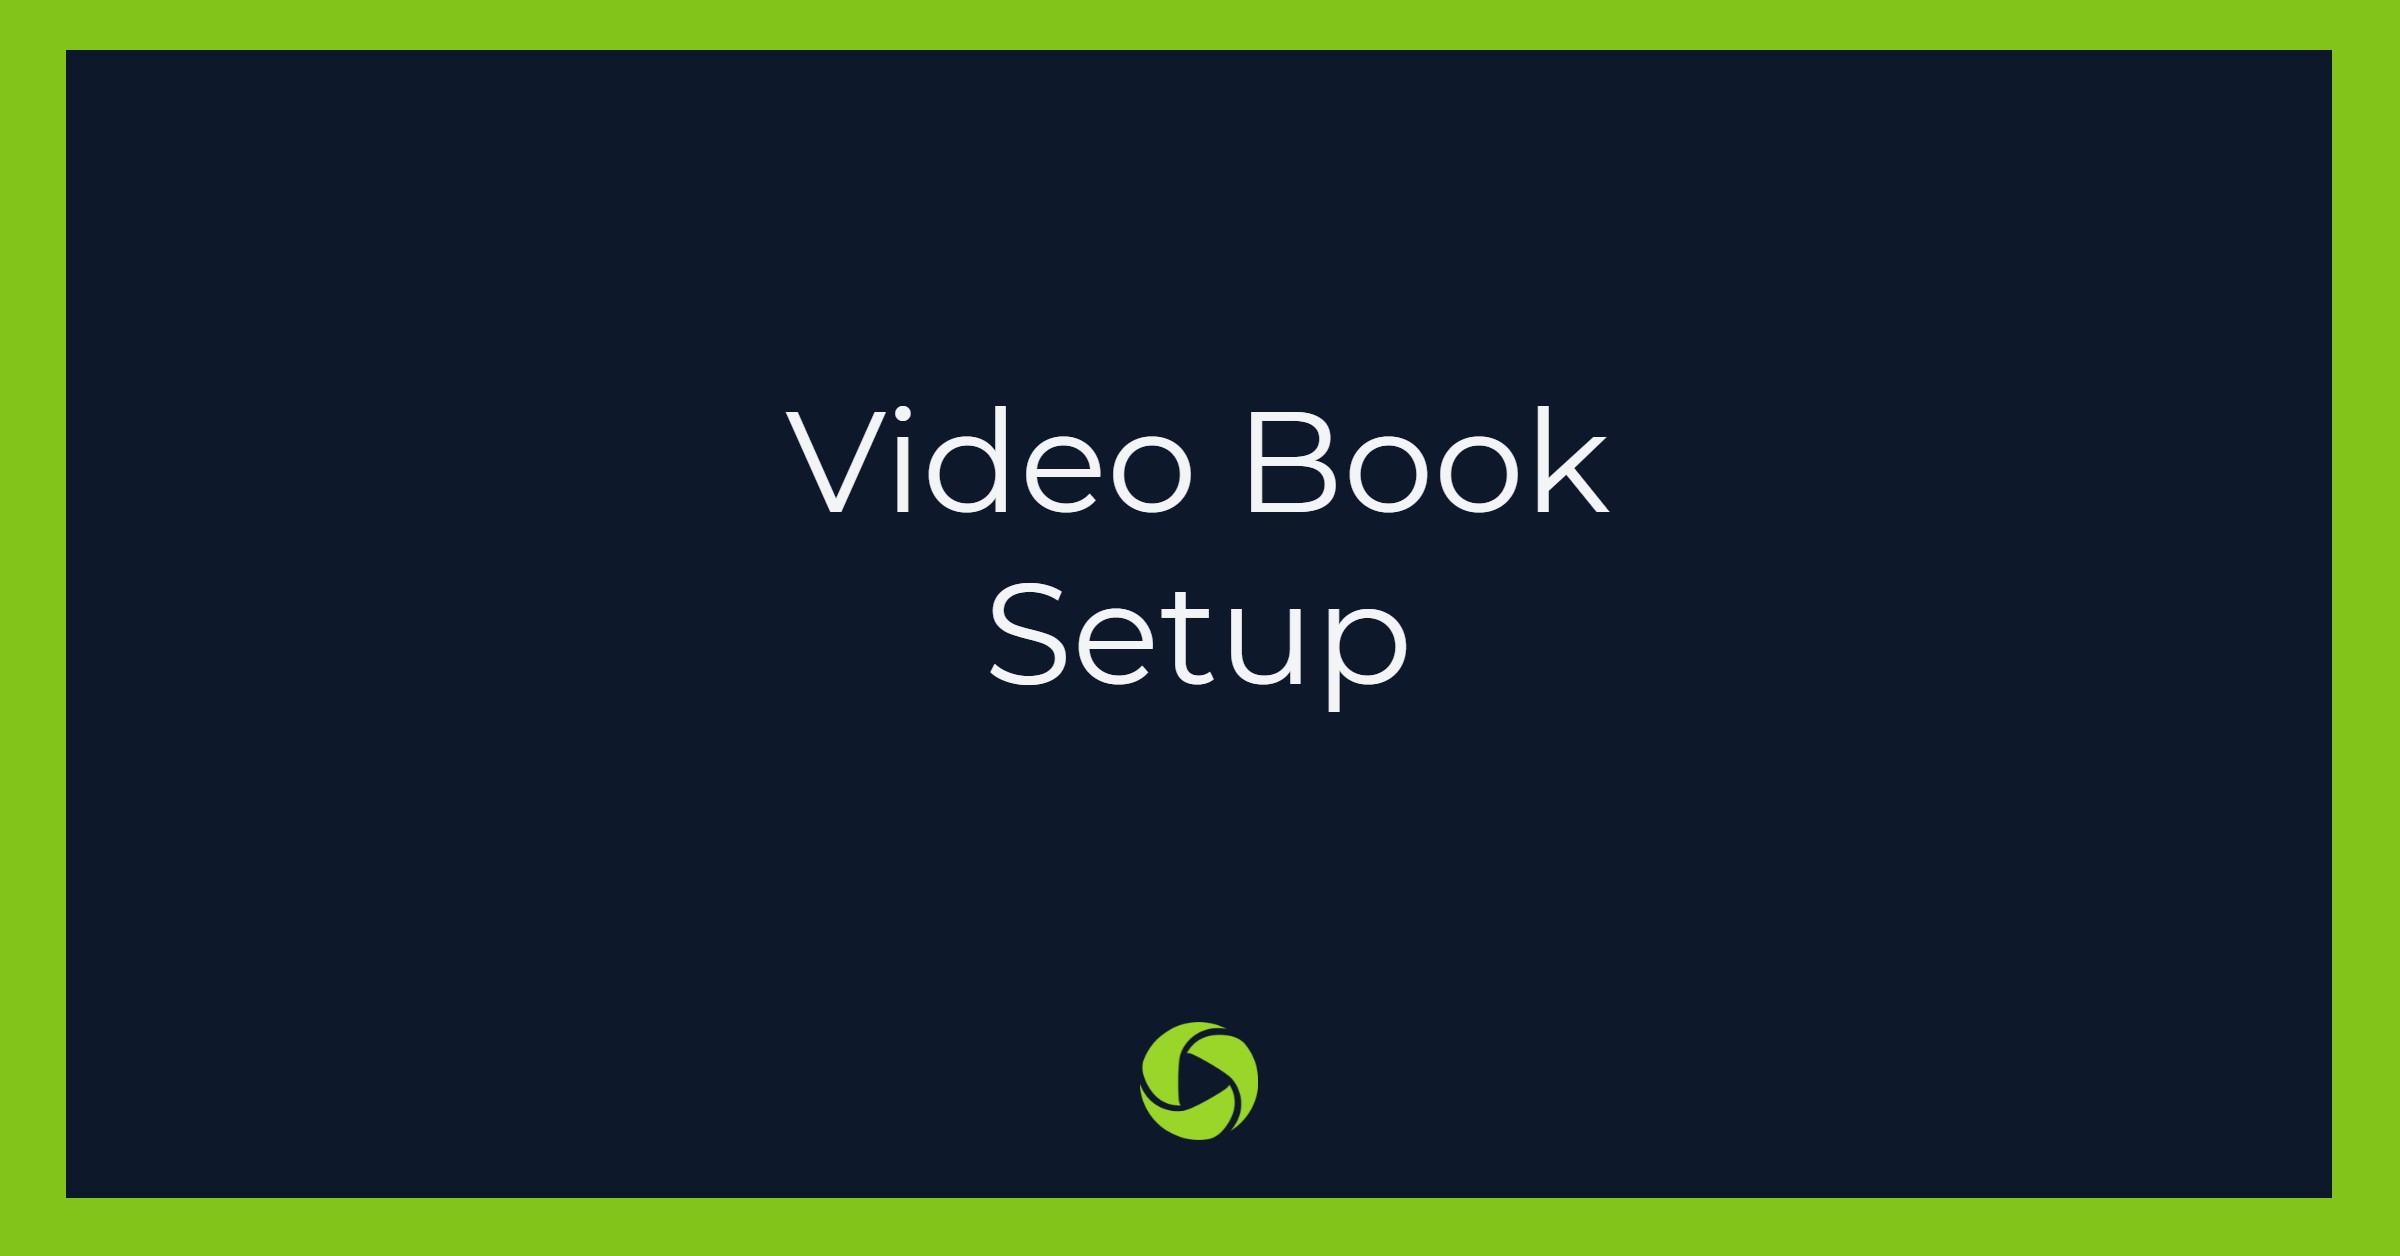 Video Book Setup